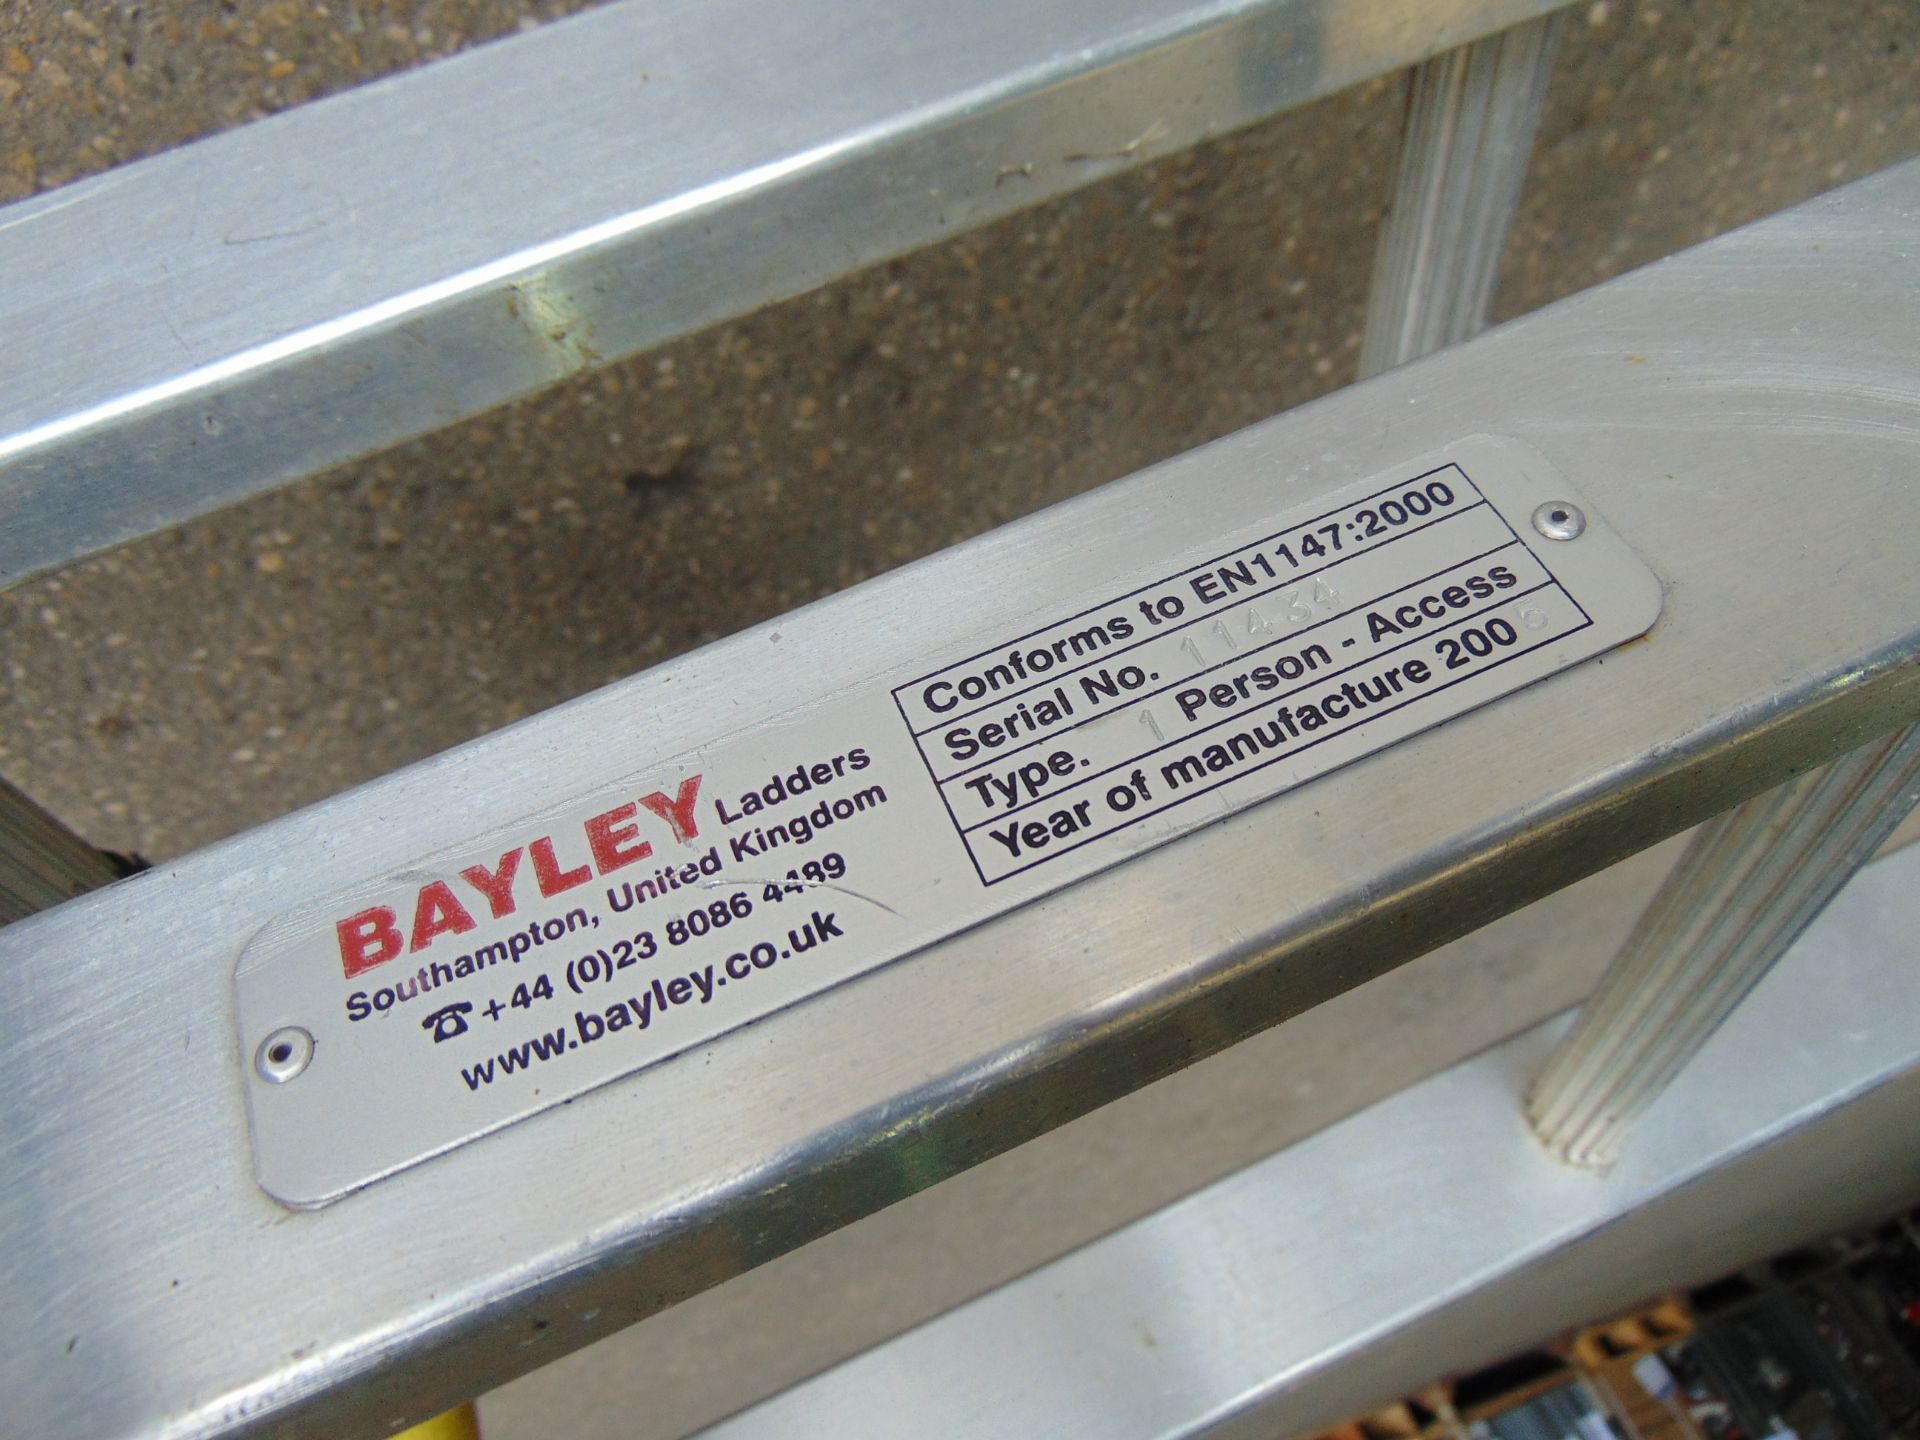 Bayley Folding Roof Ladder - Image 7 of 8